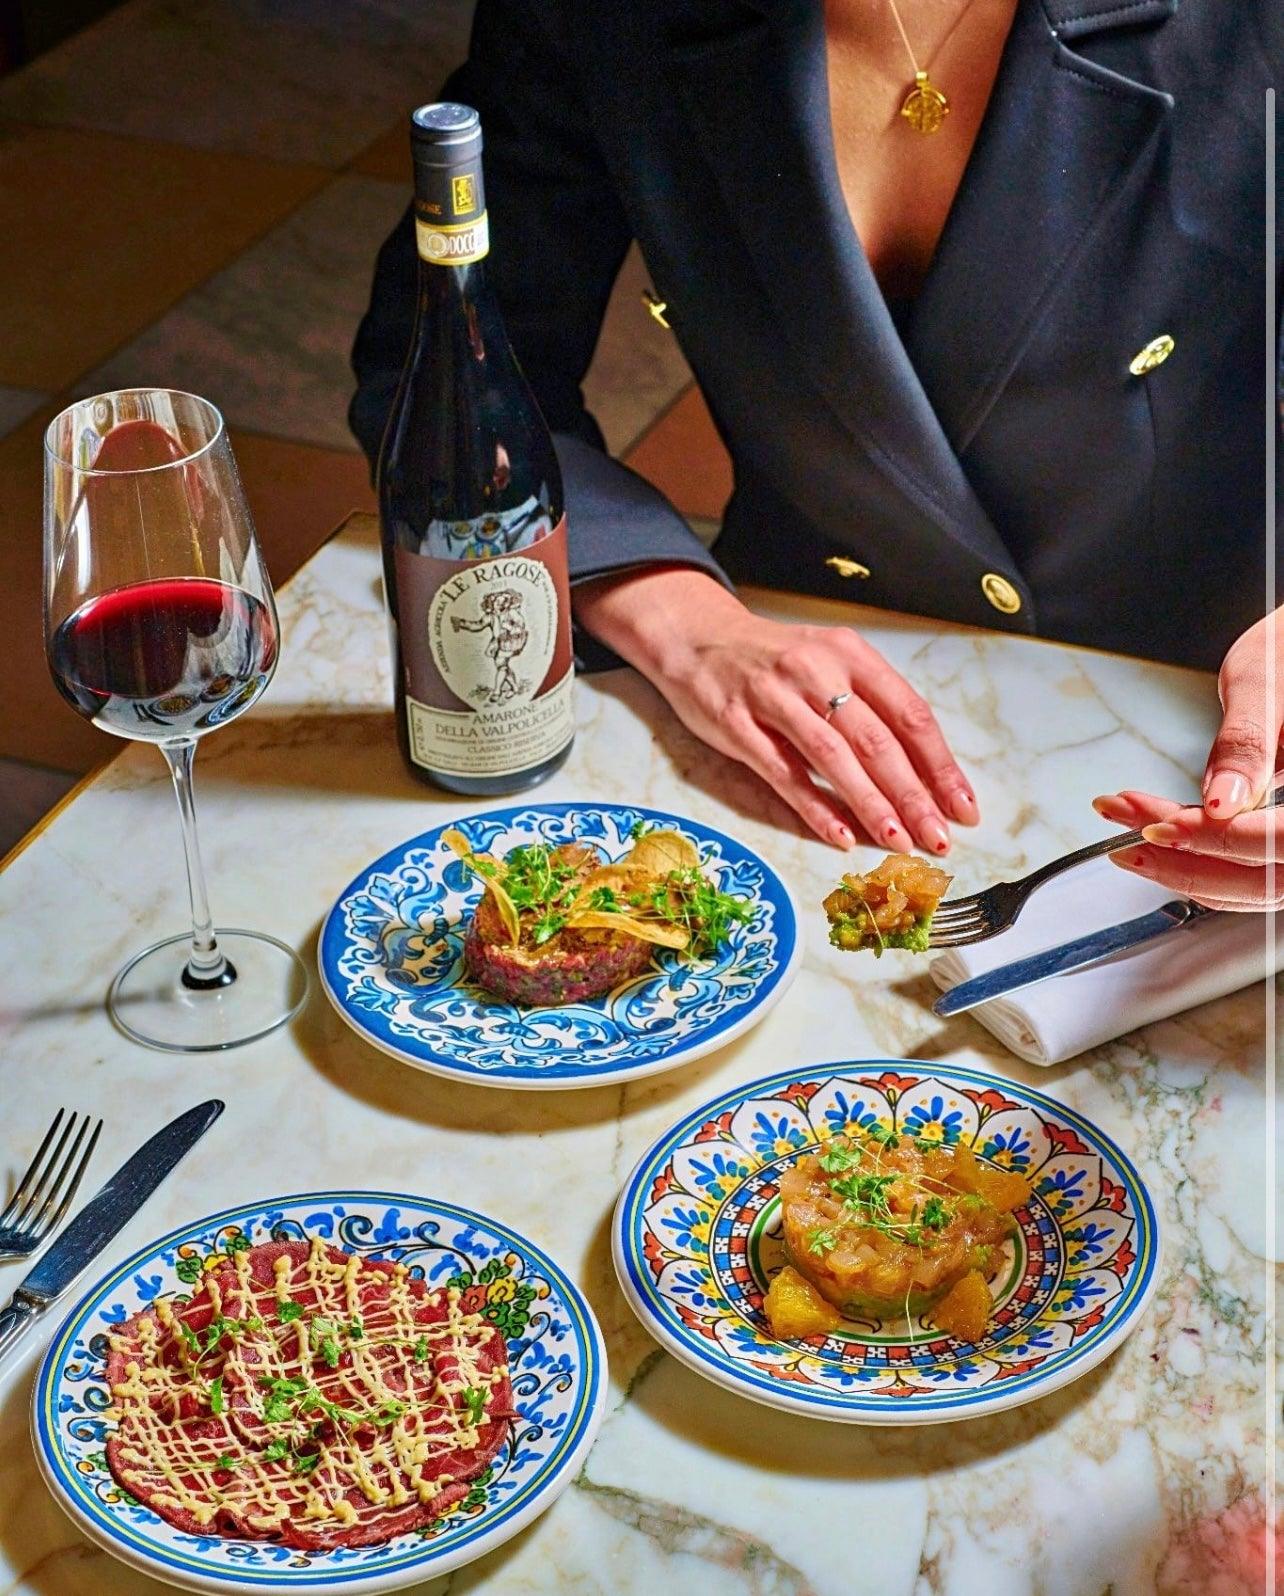 Capri Yellow Dinner Plate - THEHOUSEFUL